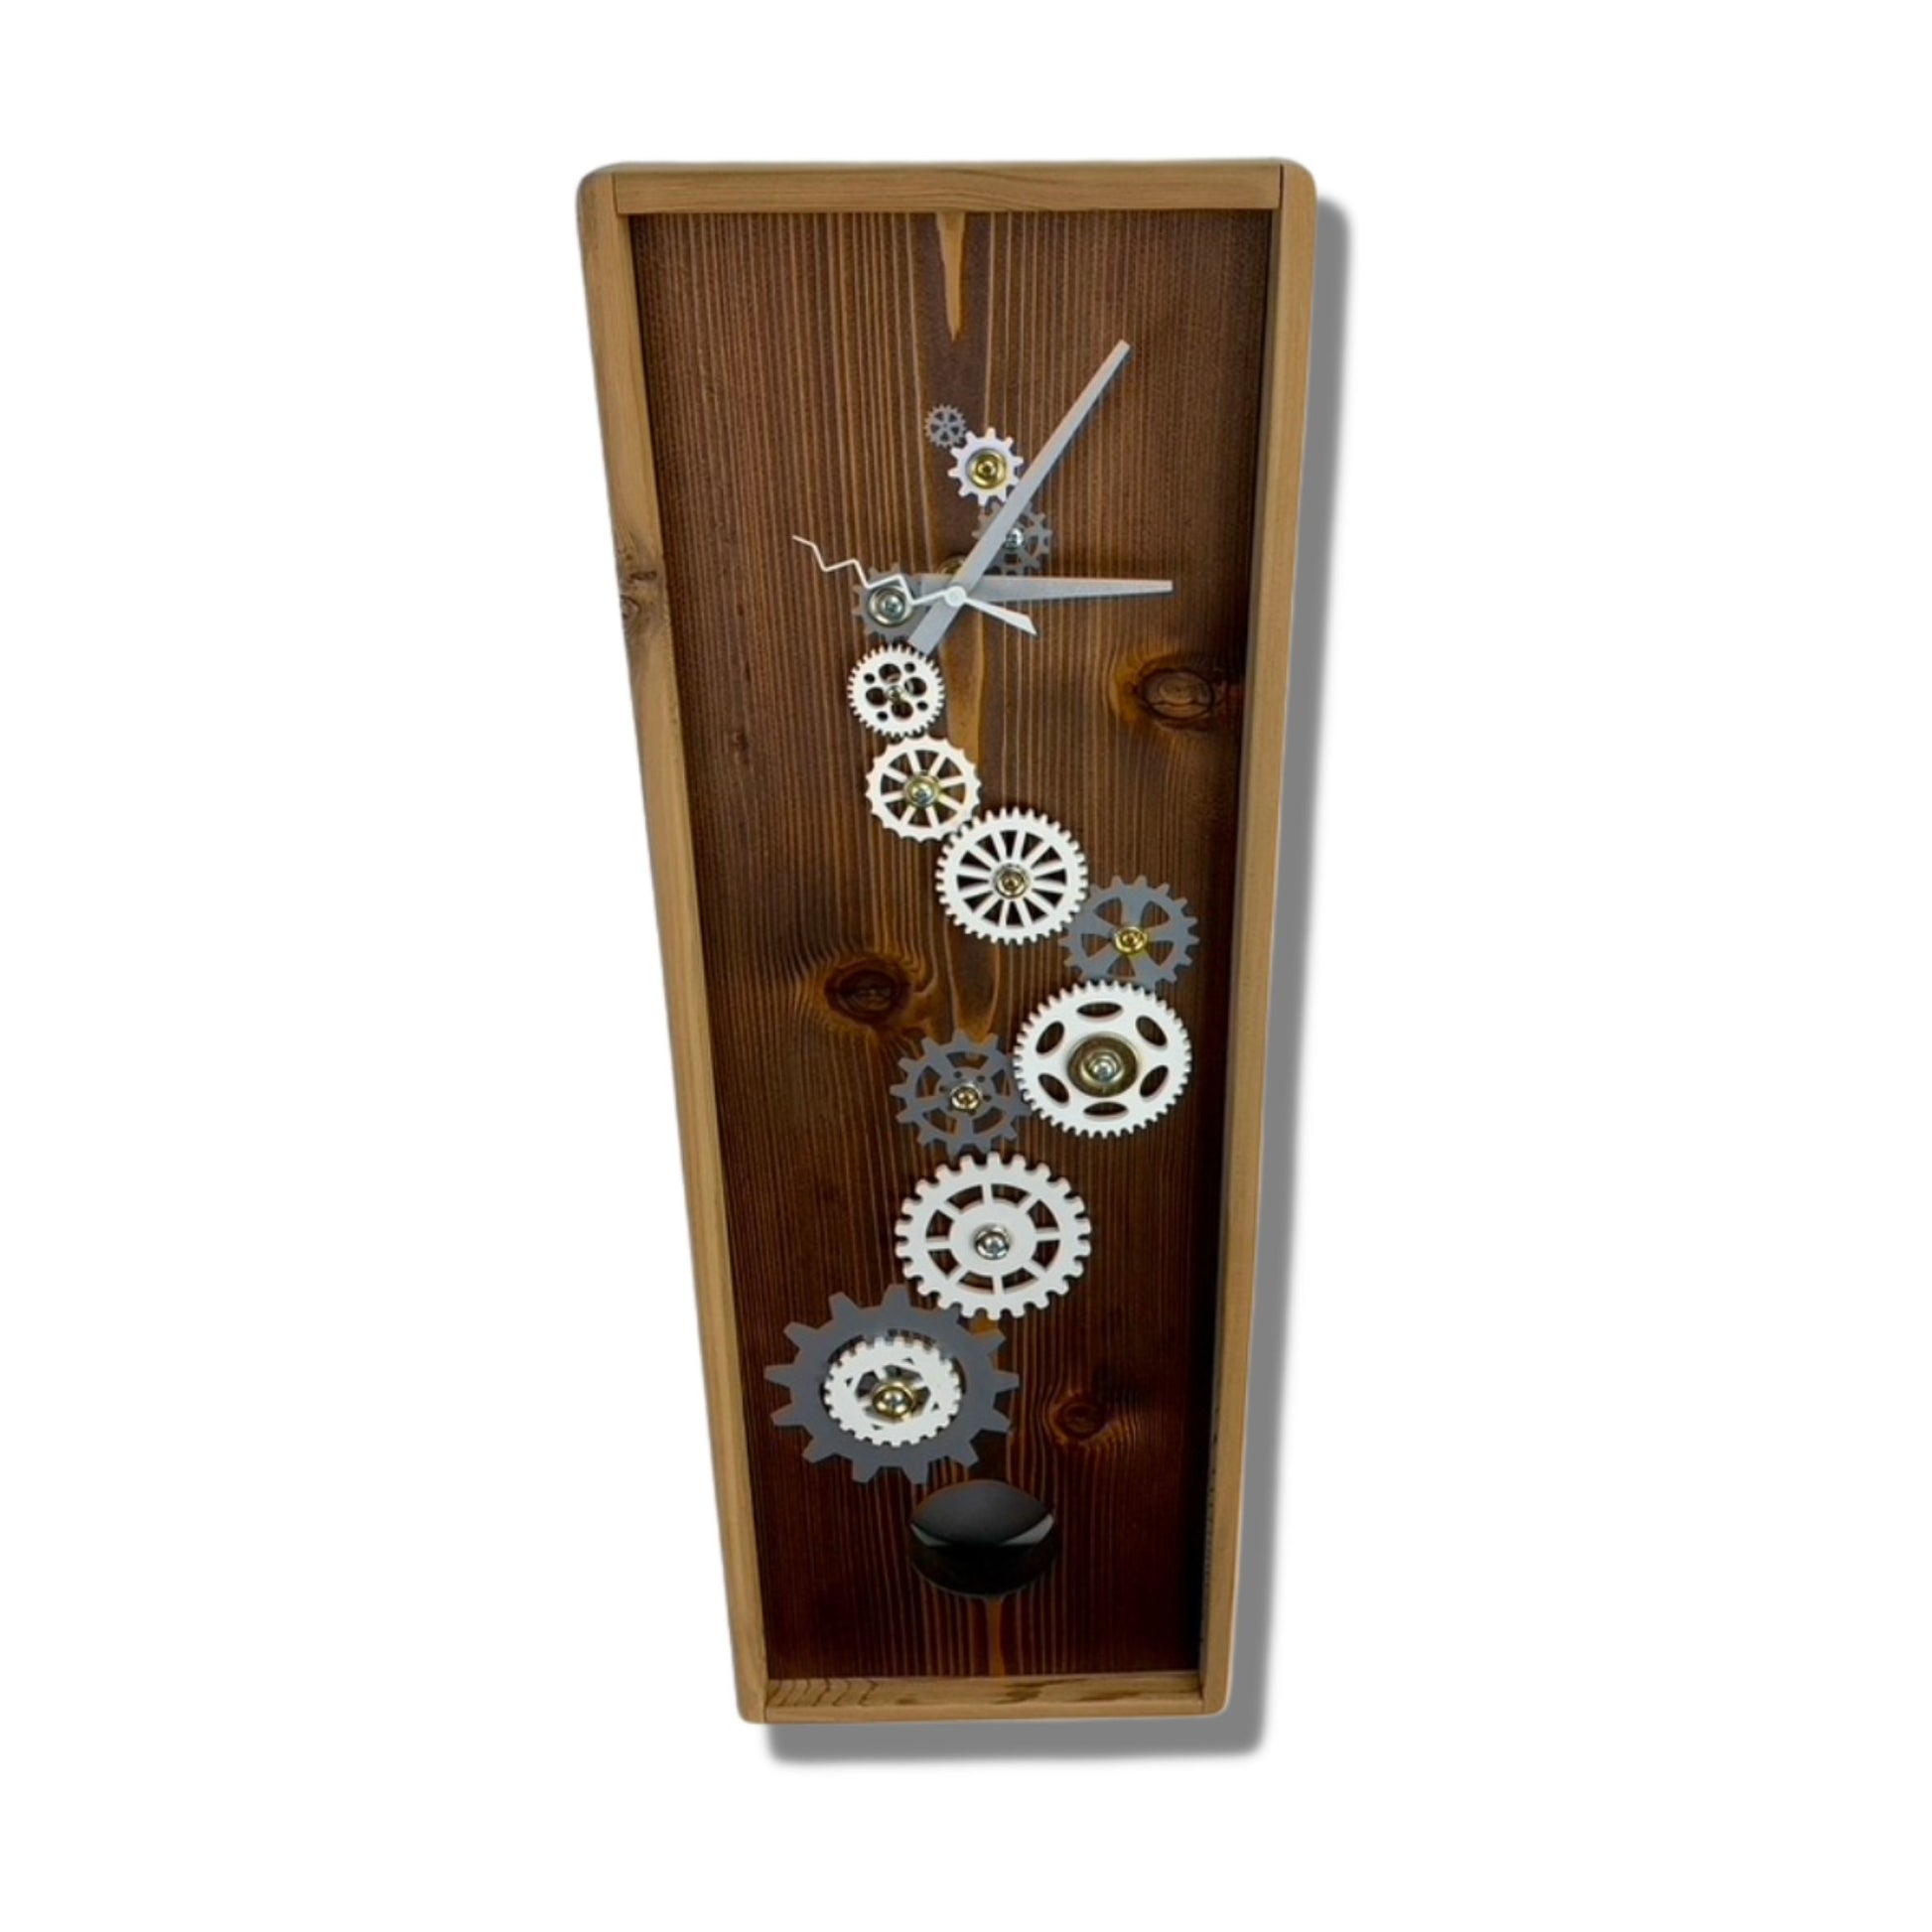 KingWood Pendulum Wall Clock w/ Gears, Cedar & Silver on top